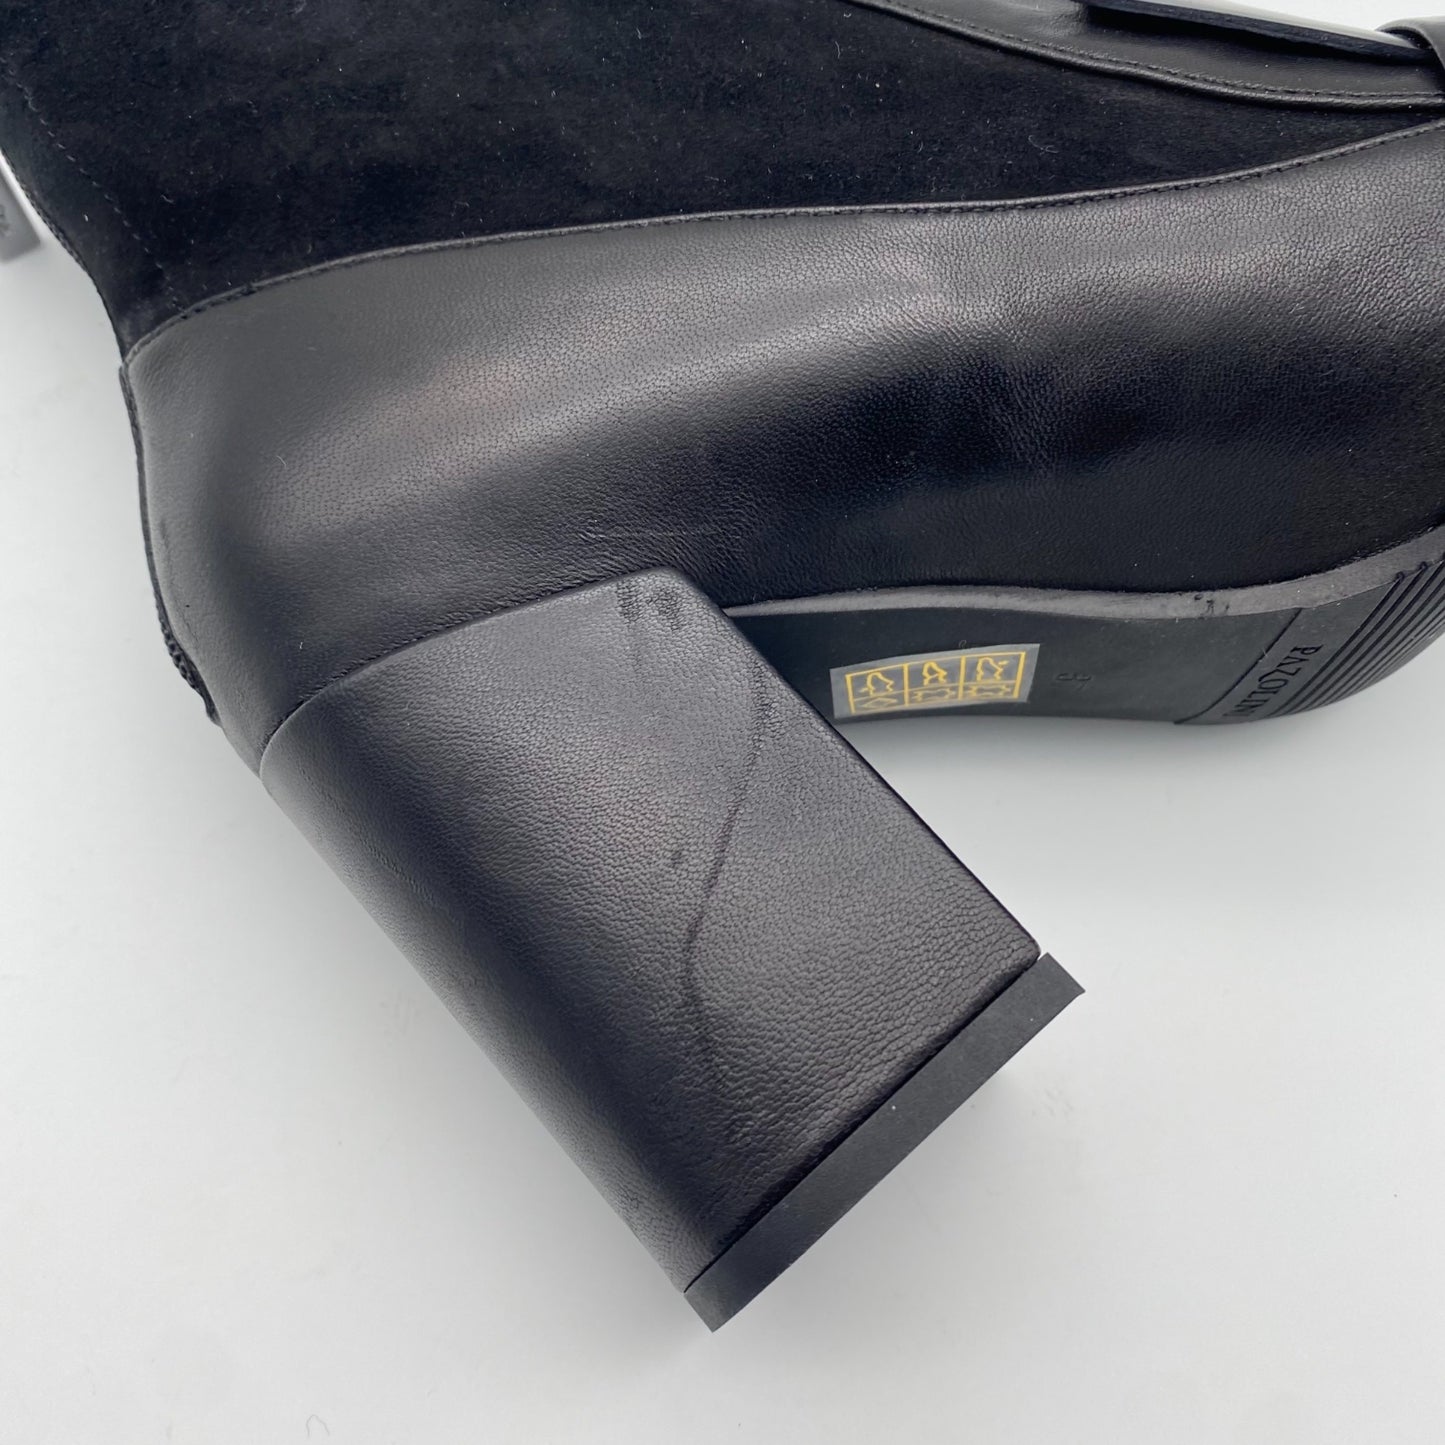 NWOT Carlo Pazolini Black Leather Kilte Block Heel Ankle Boots EU Size 37